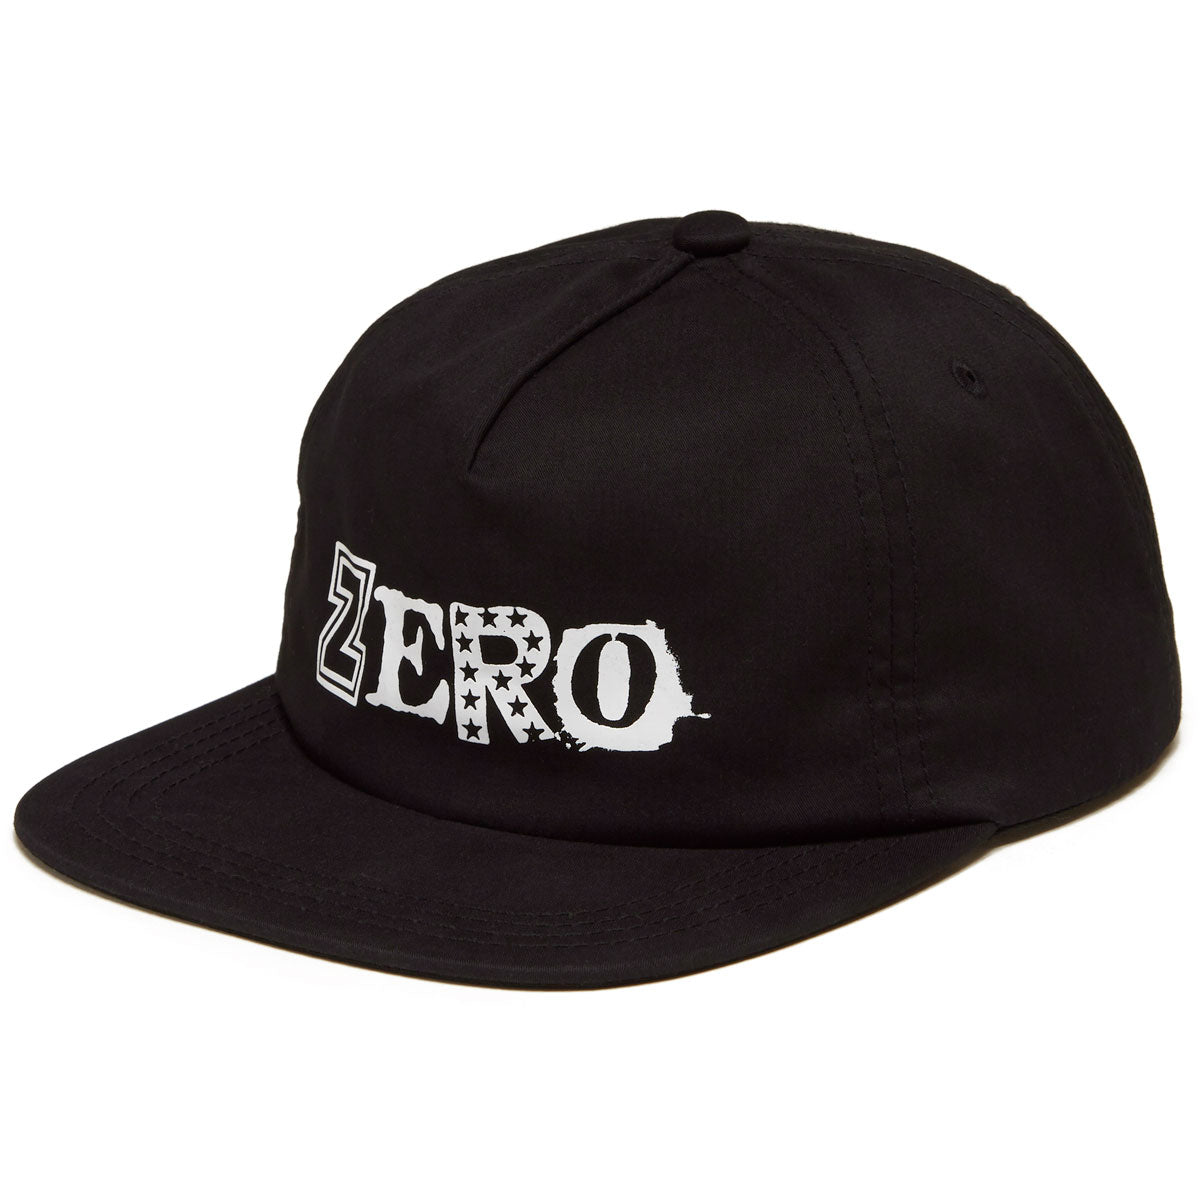 Zero Ransom Hat - Black image 1